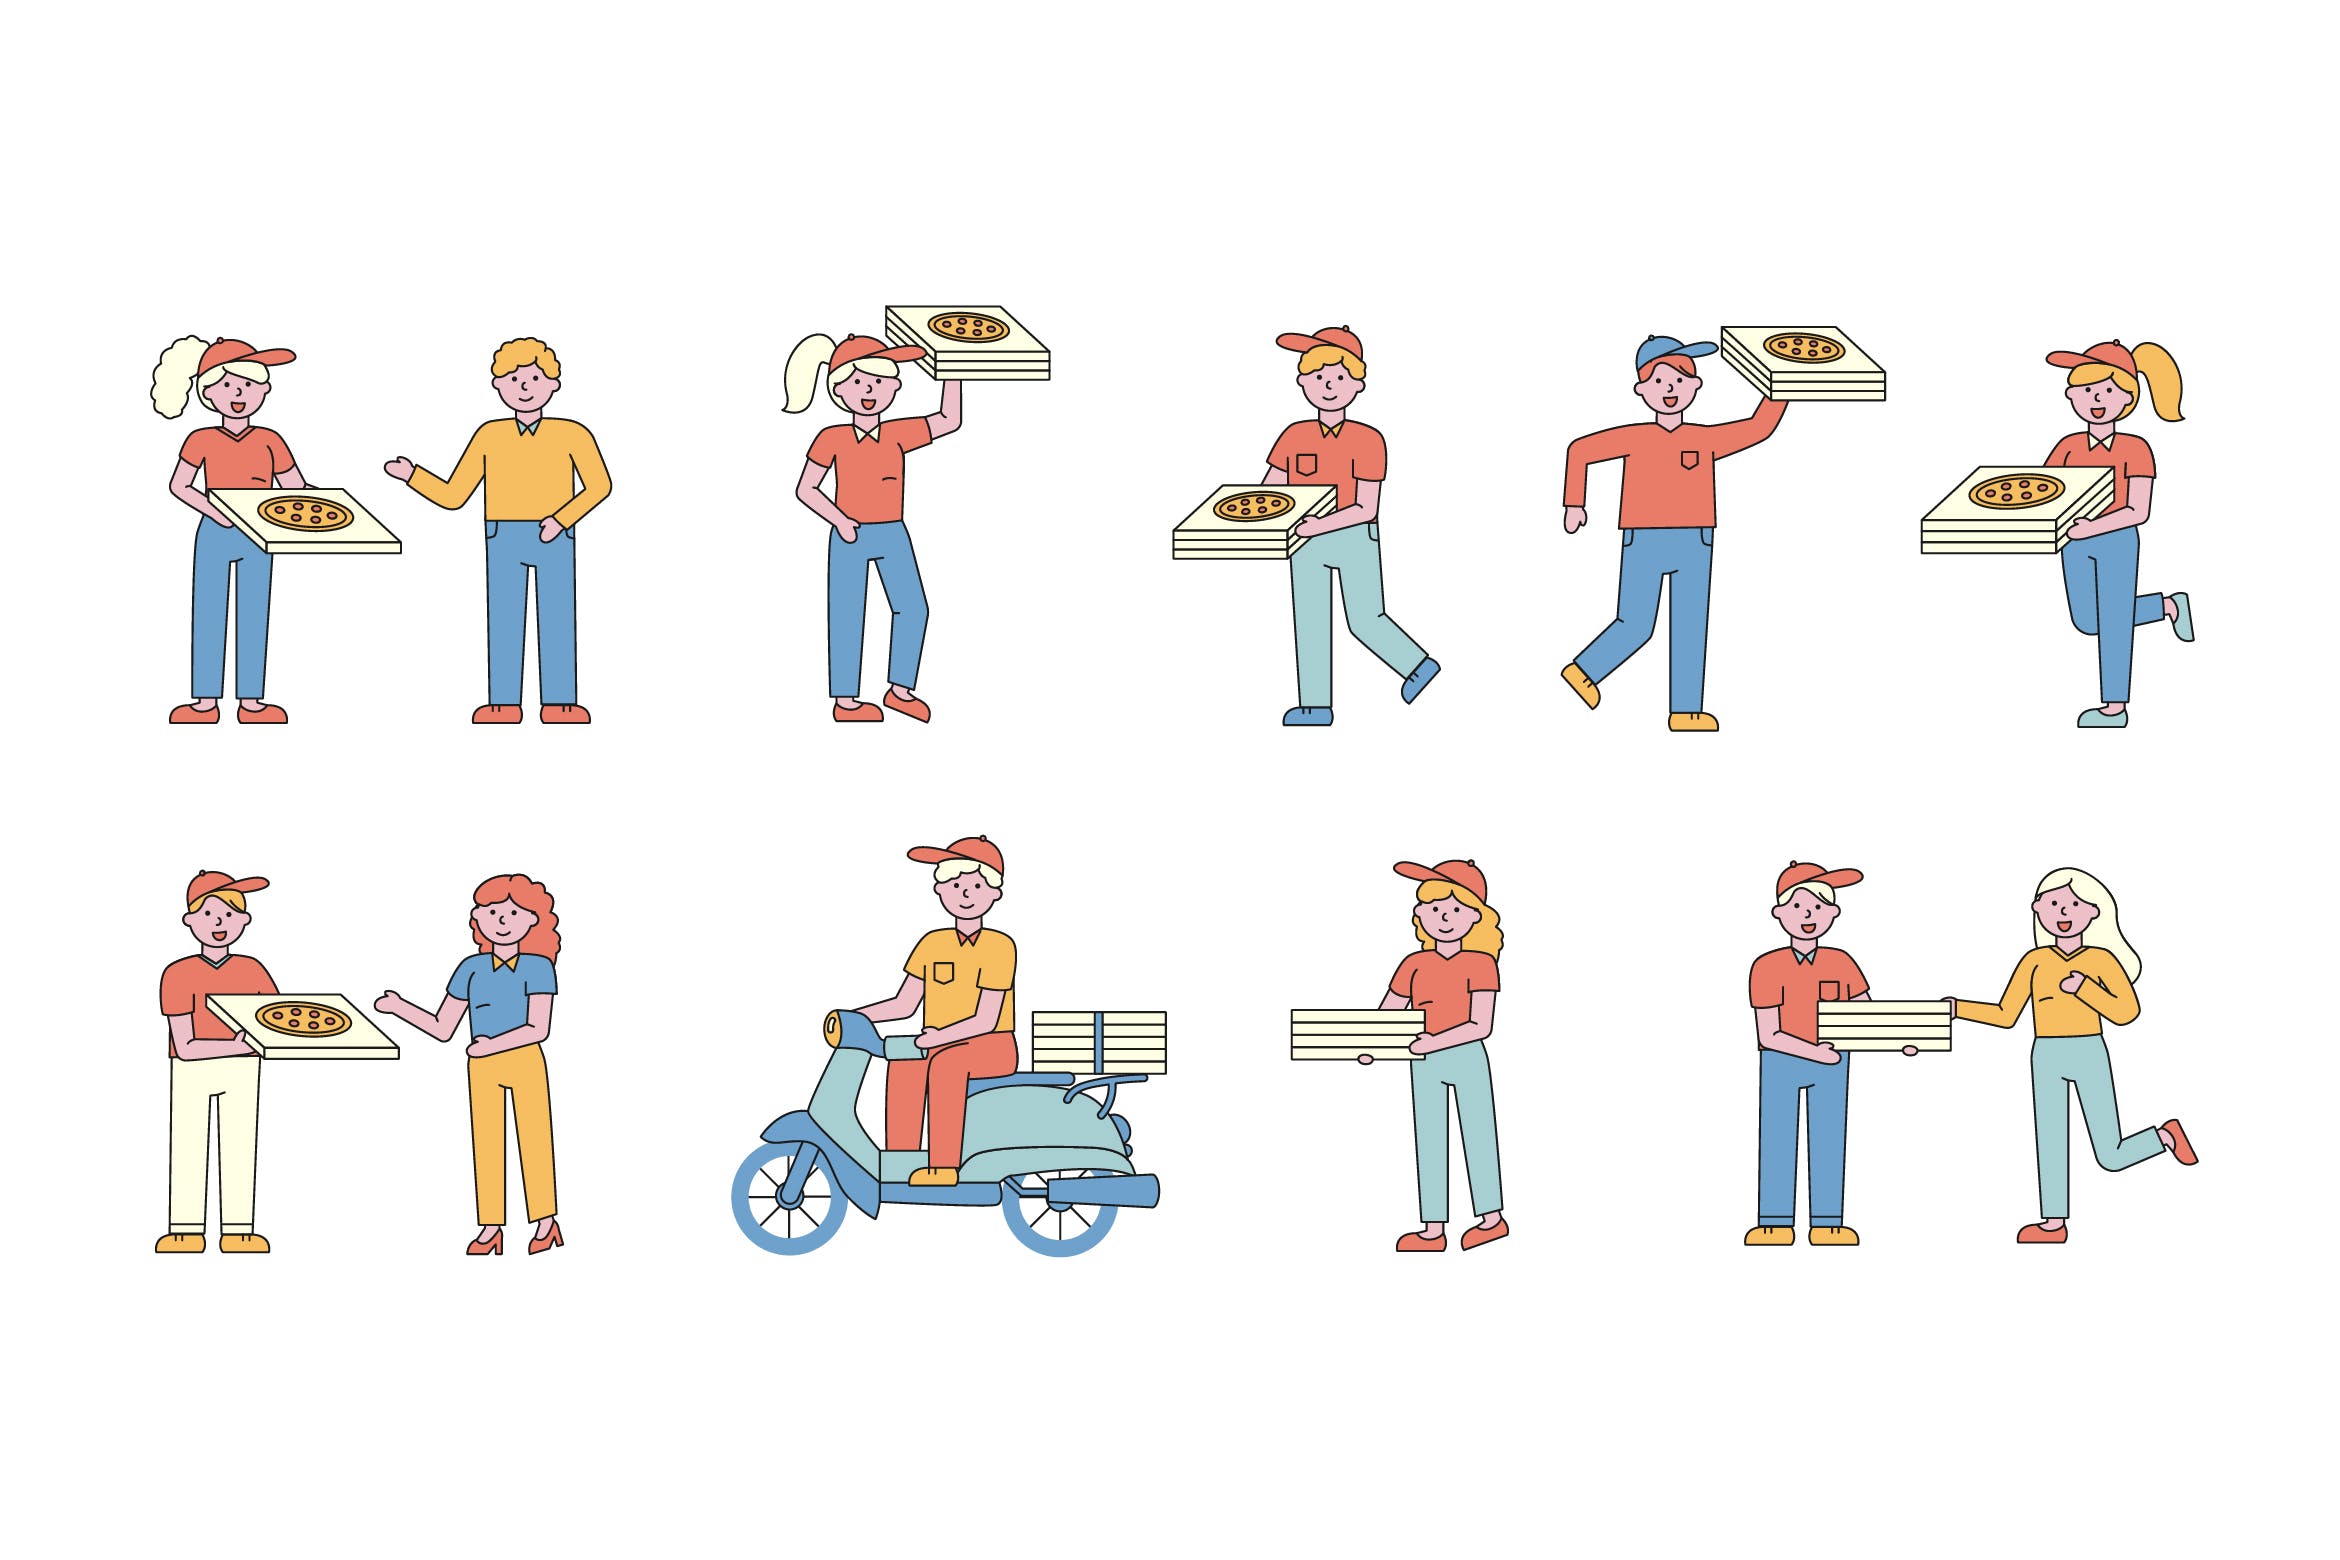 披萨送餐员人物形象线条艺术矢量插画非凡图库精选素材 Pizza delivery Lineart People Character Collection插图